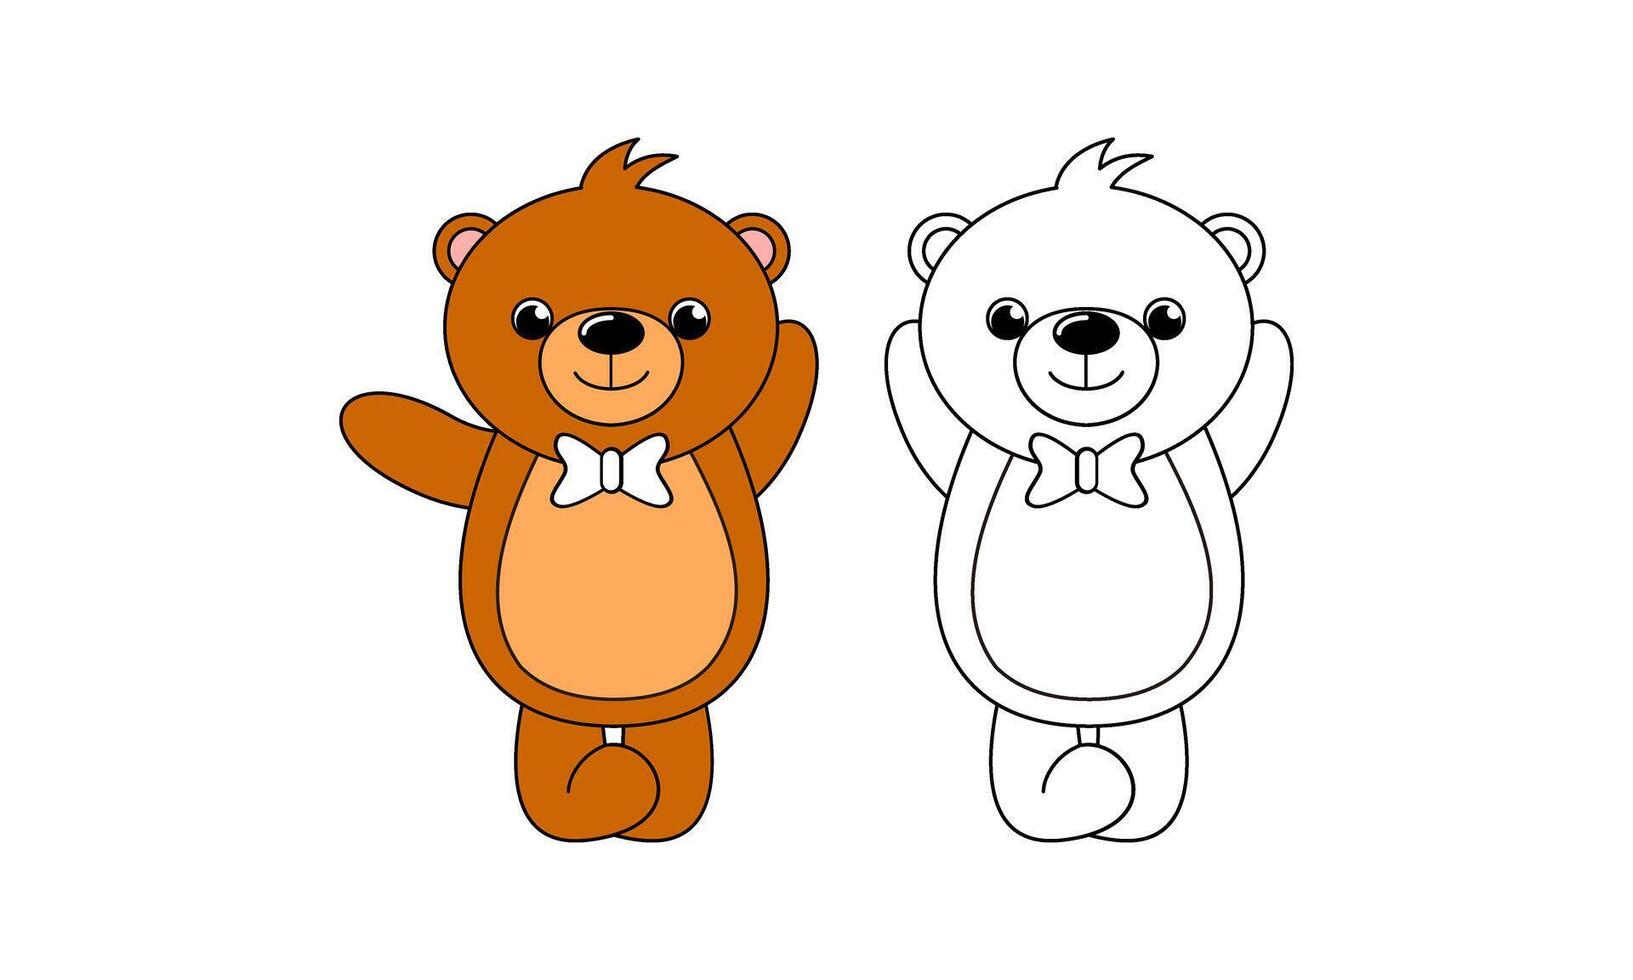 Doodles classic brown teddy bear vector